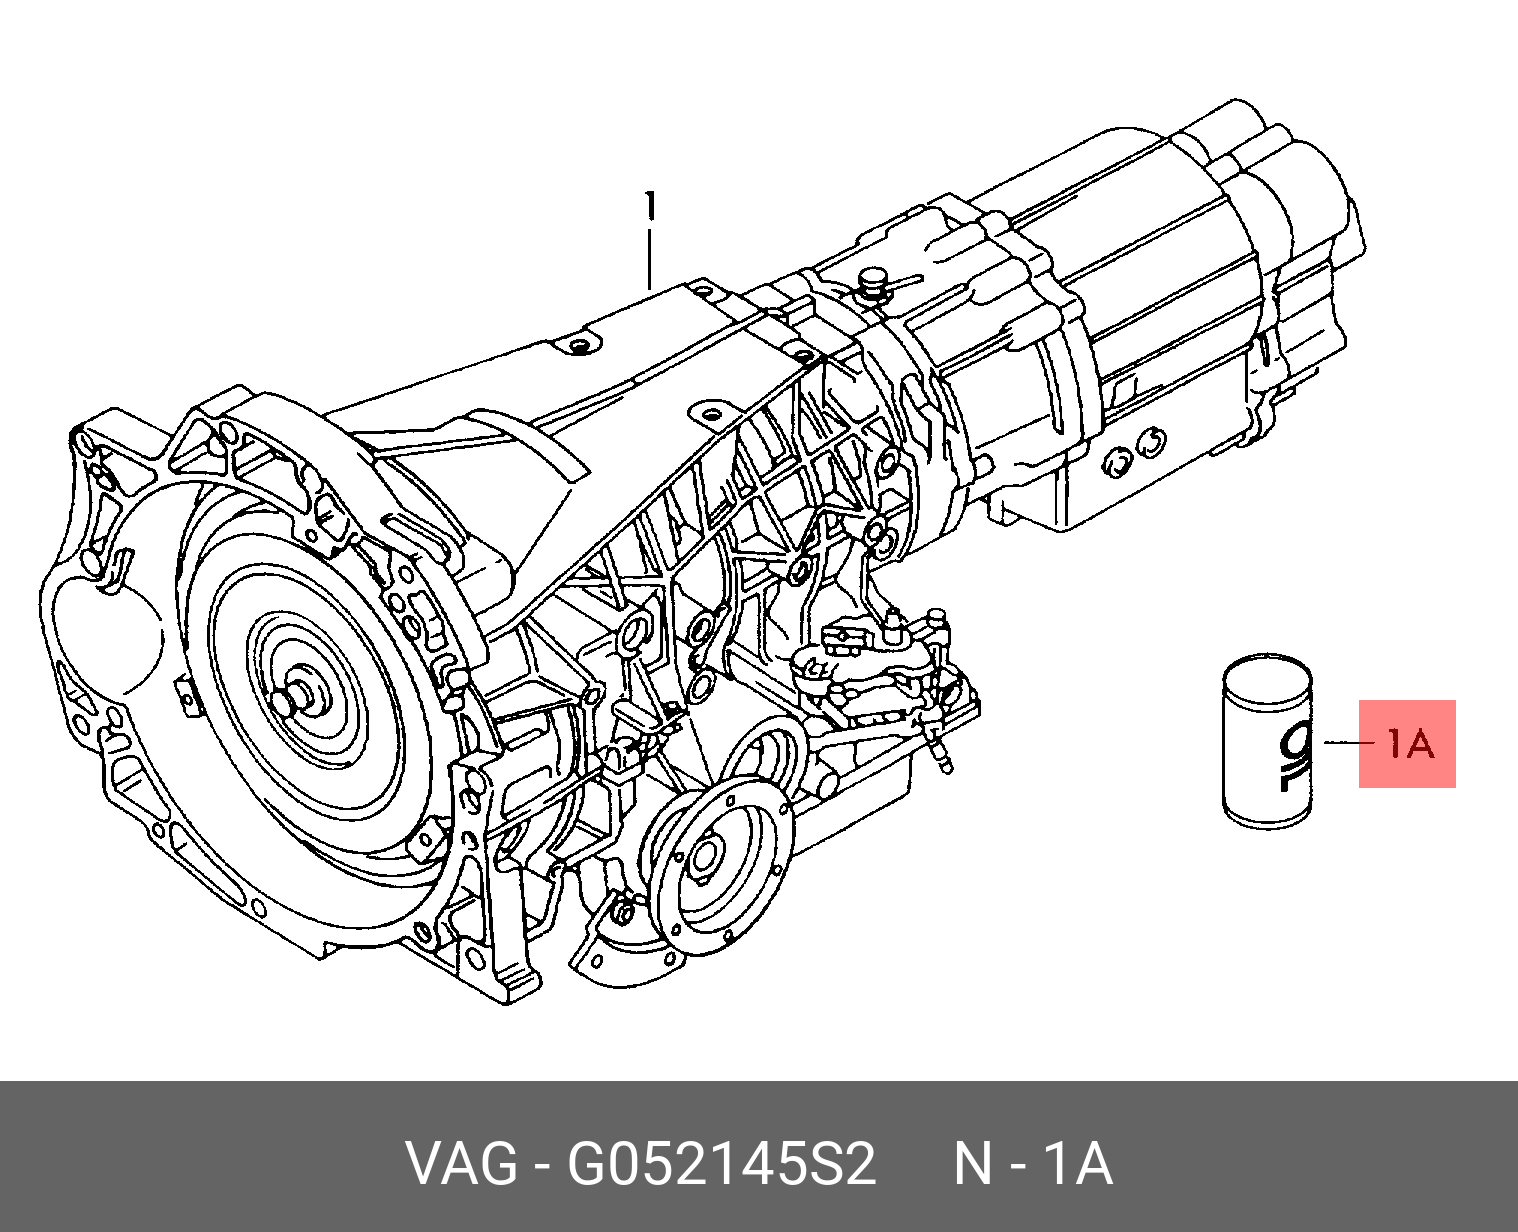 Трансмиссионное масло VW 75w90 GL-5 1л  G052145 A1 | G052145 A2 | G052145 S2 | G052911 A2